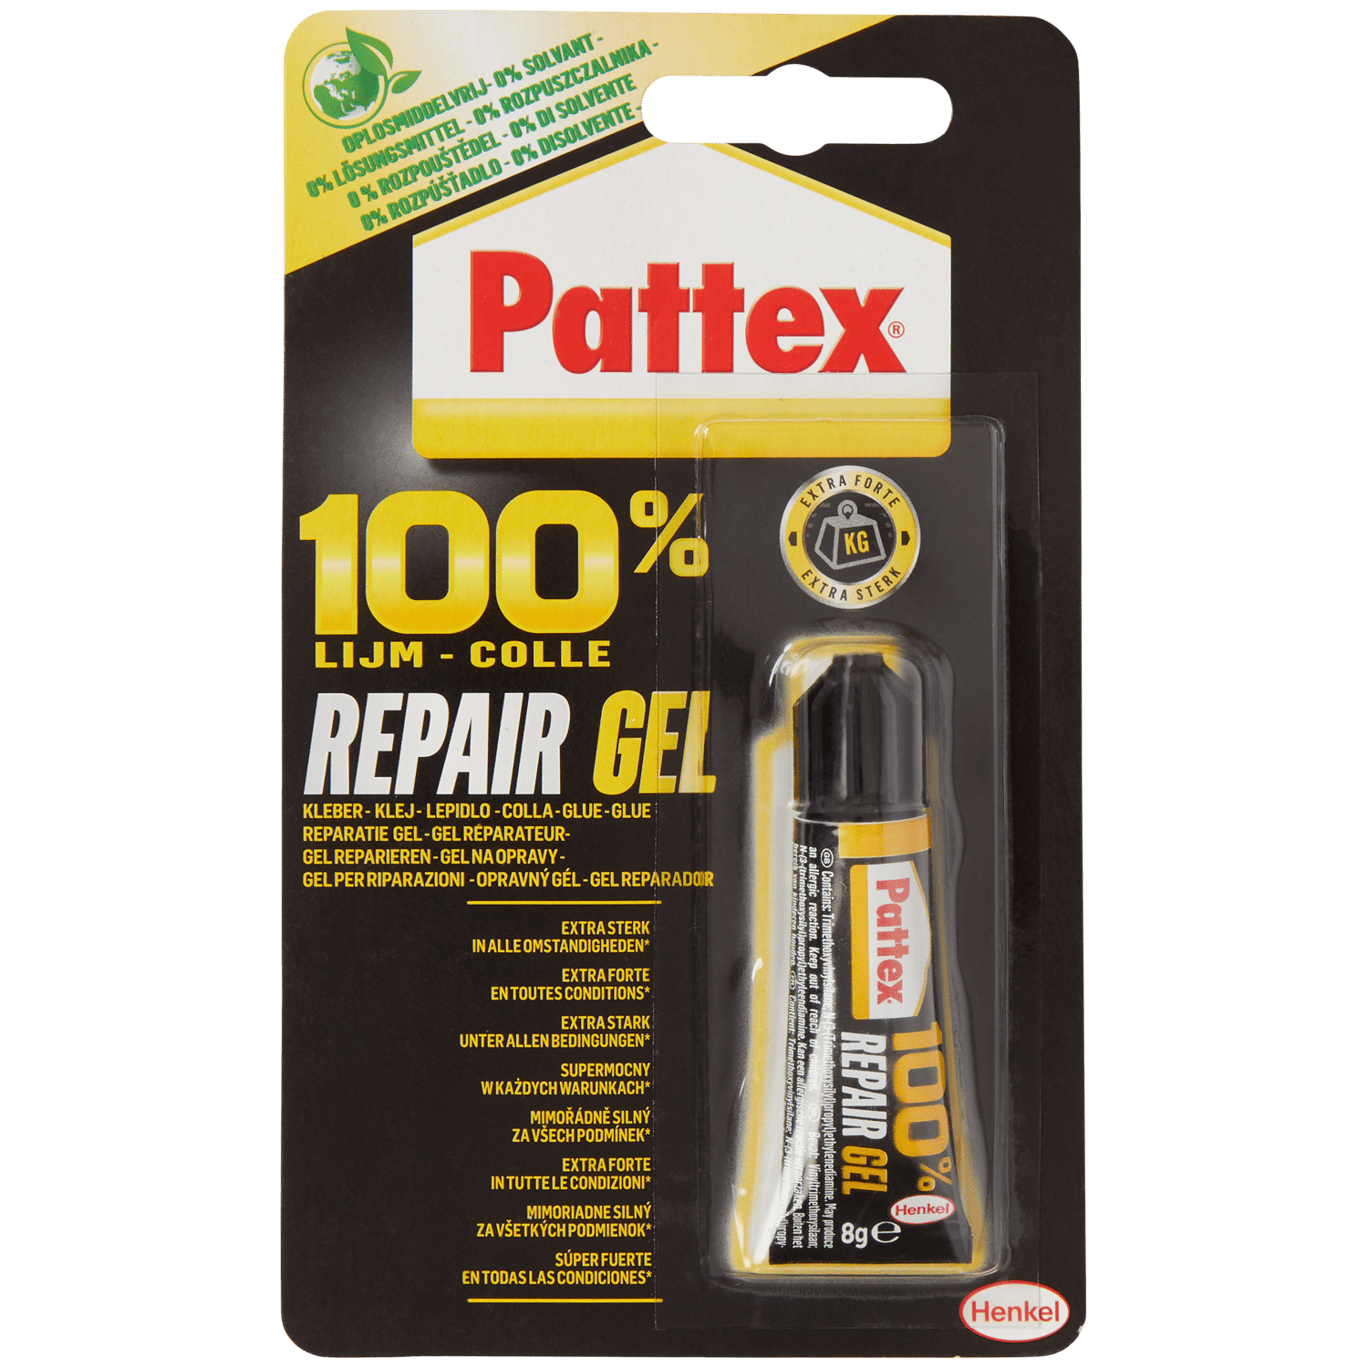 Omtrek punt ozon Pattex 100% repair gel-lijm | Action.com